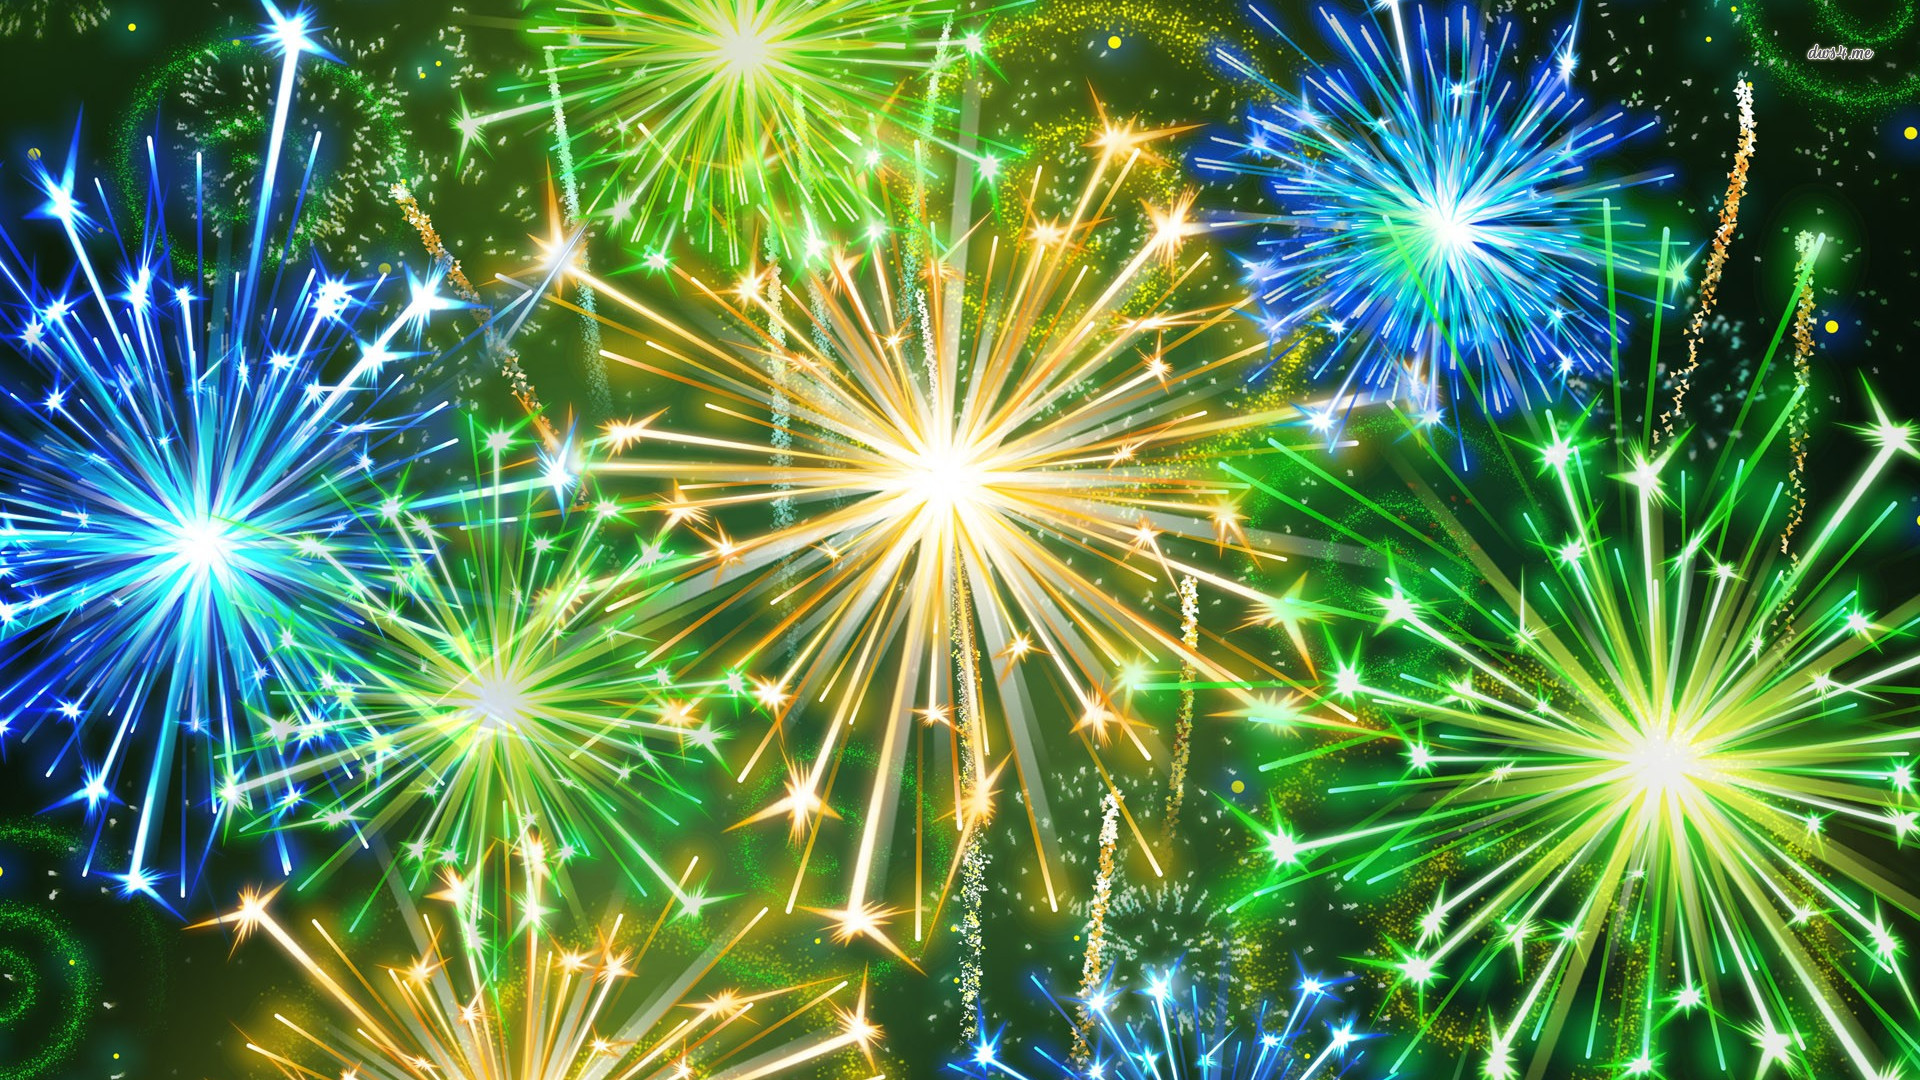 Fireworks Digital Art Wallpaper Full HD